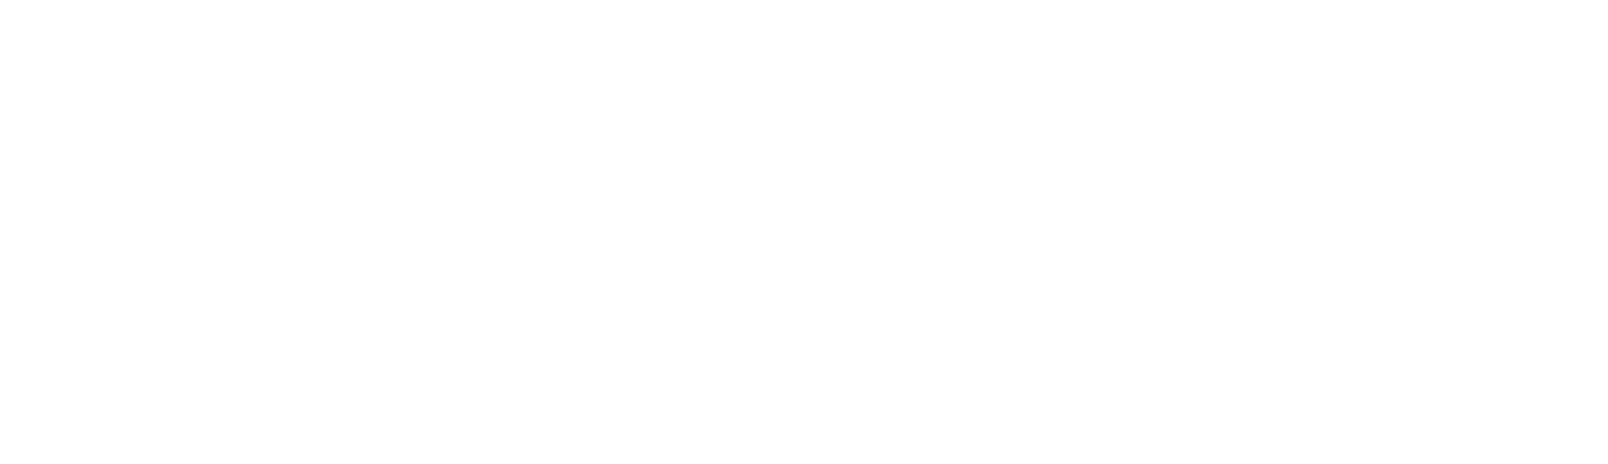 Acadis Logo